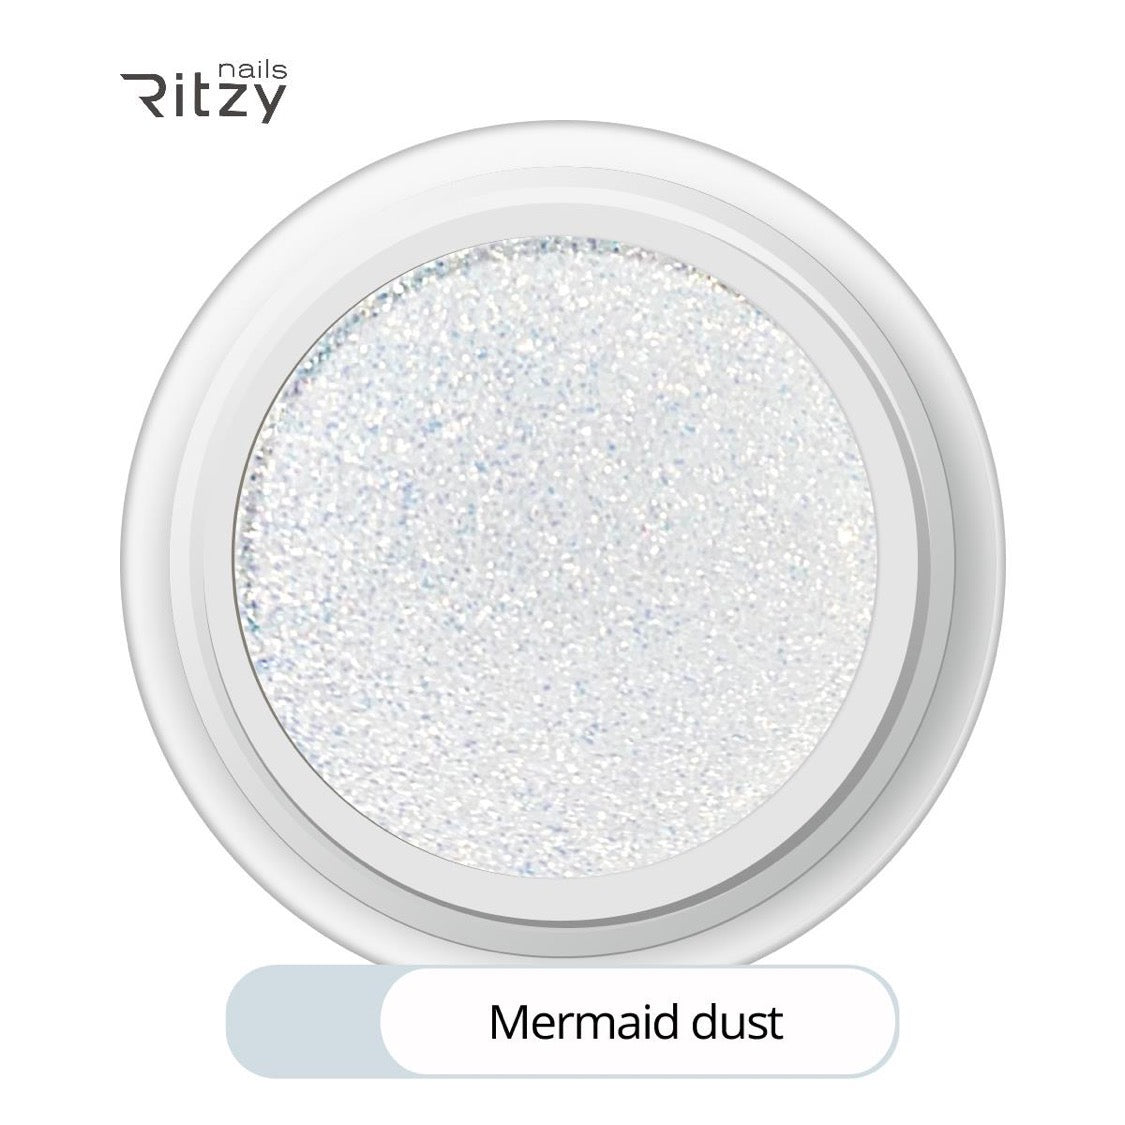 Mermaid dust